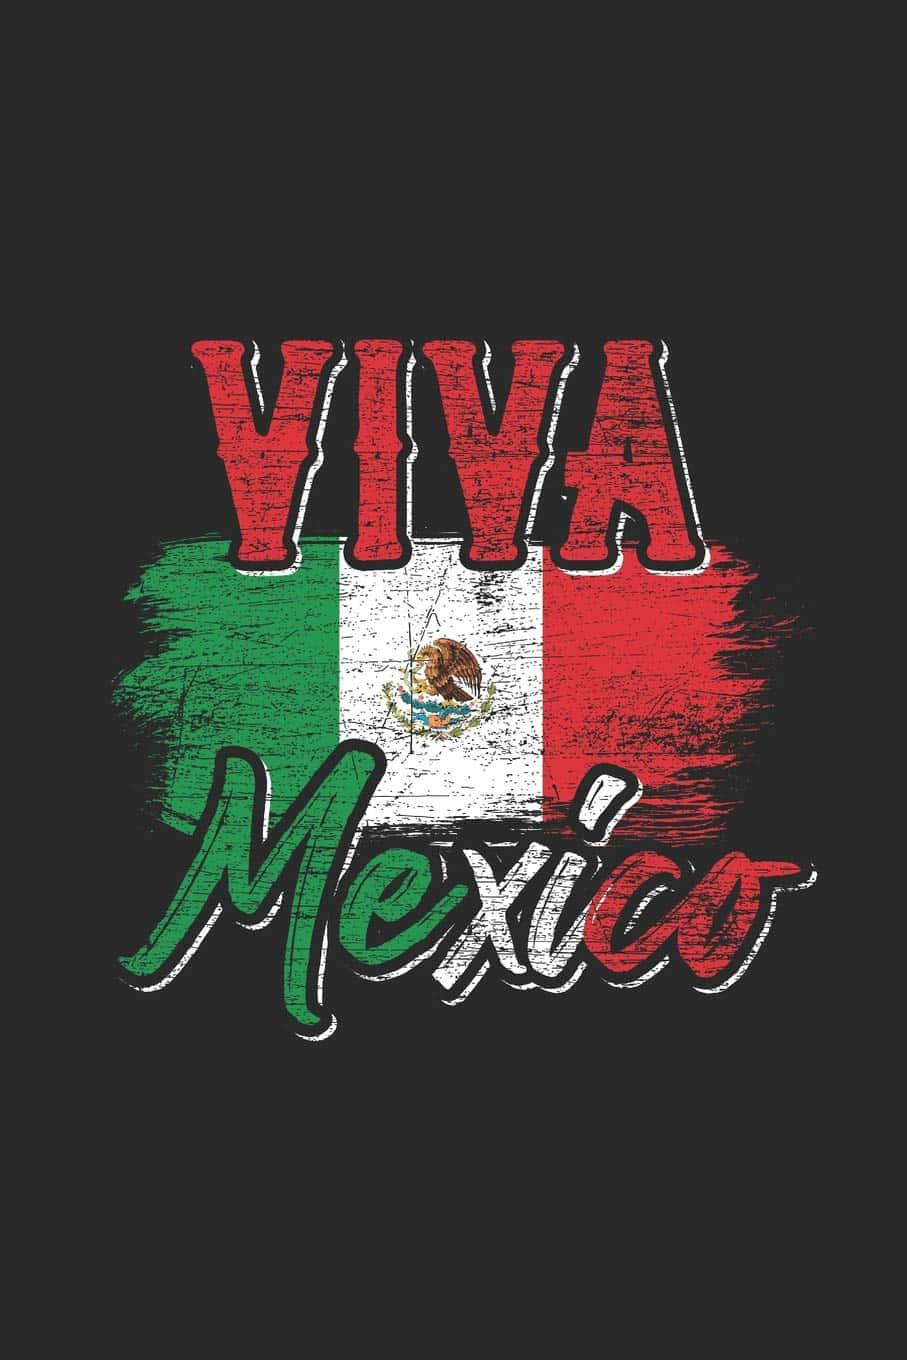 Explore the vibrant colors and culture of Viva Mexico! Wallpaper